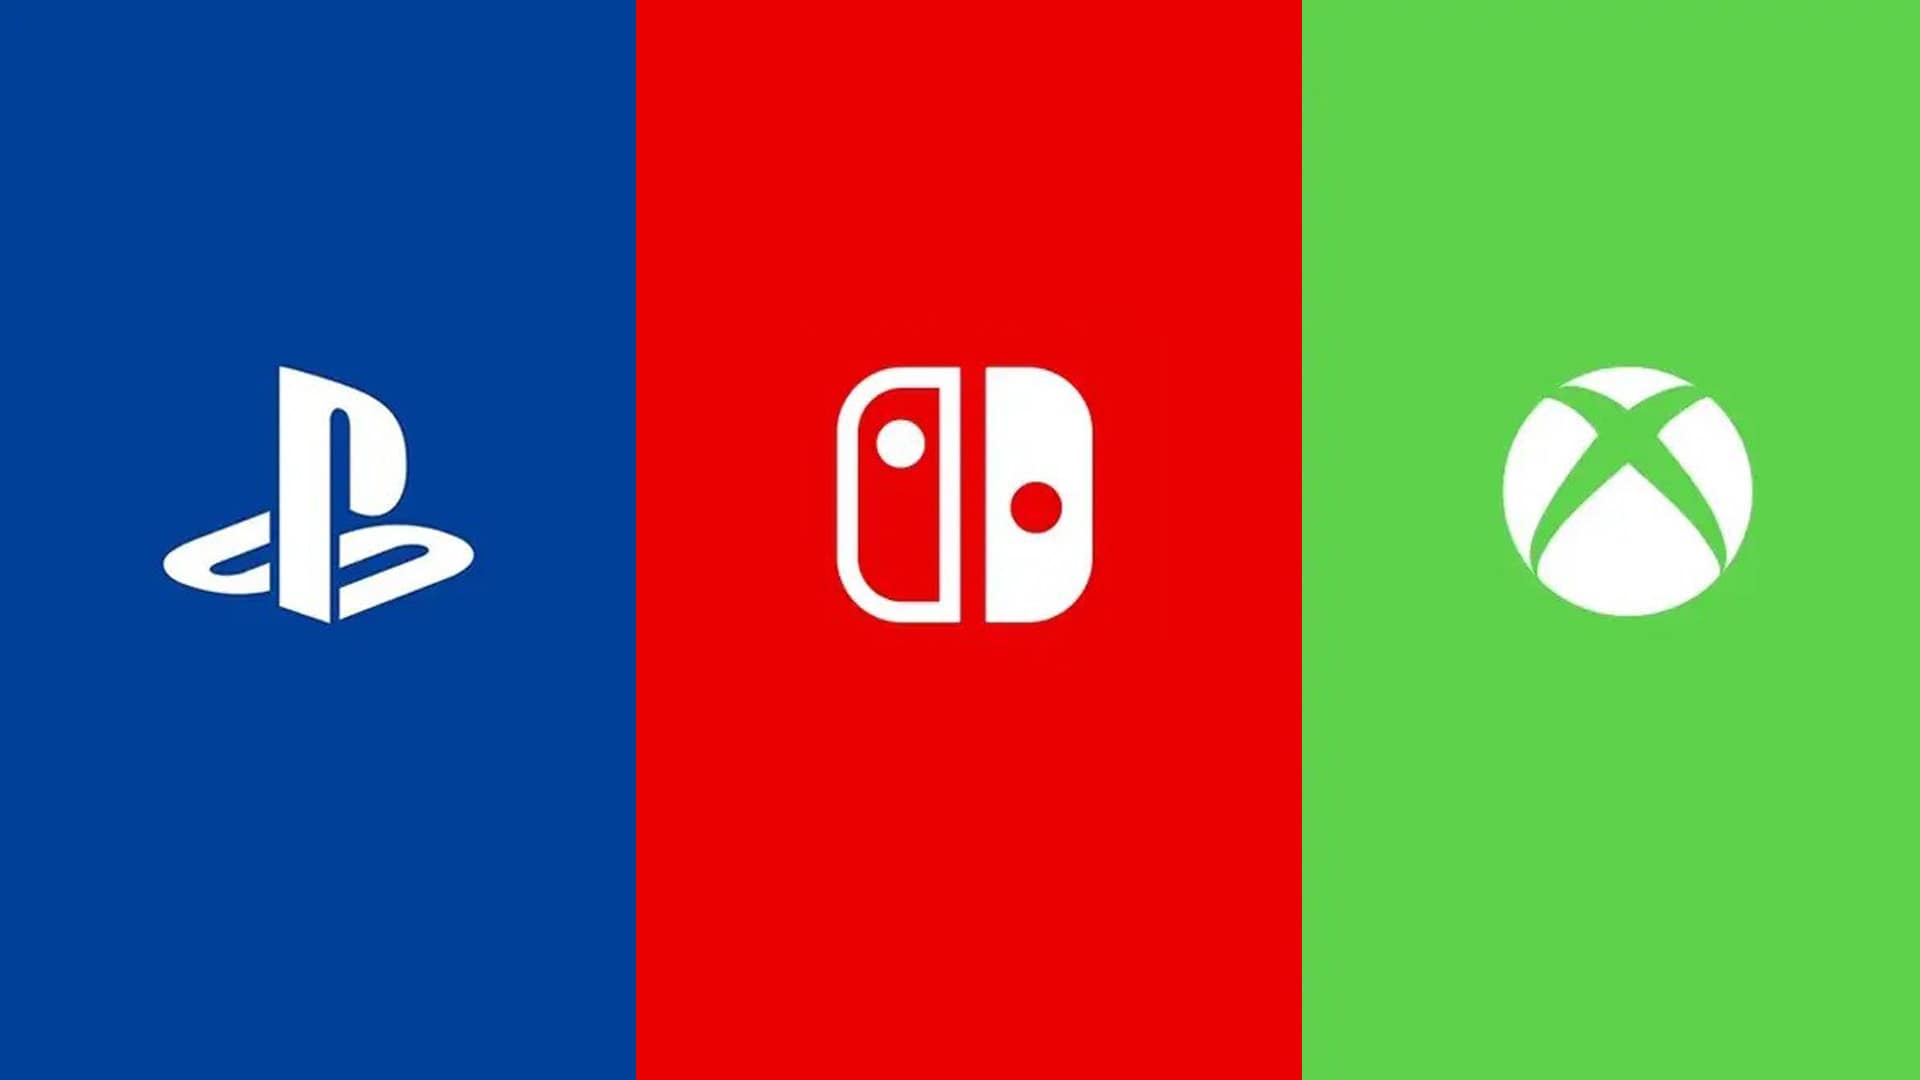 Icons representing major gaming platforms like Xbox, PlayStation, and PC